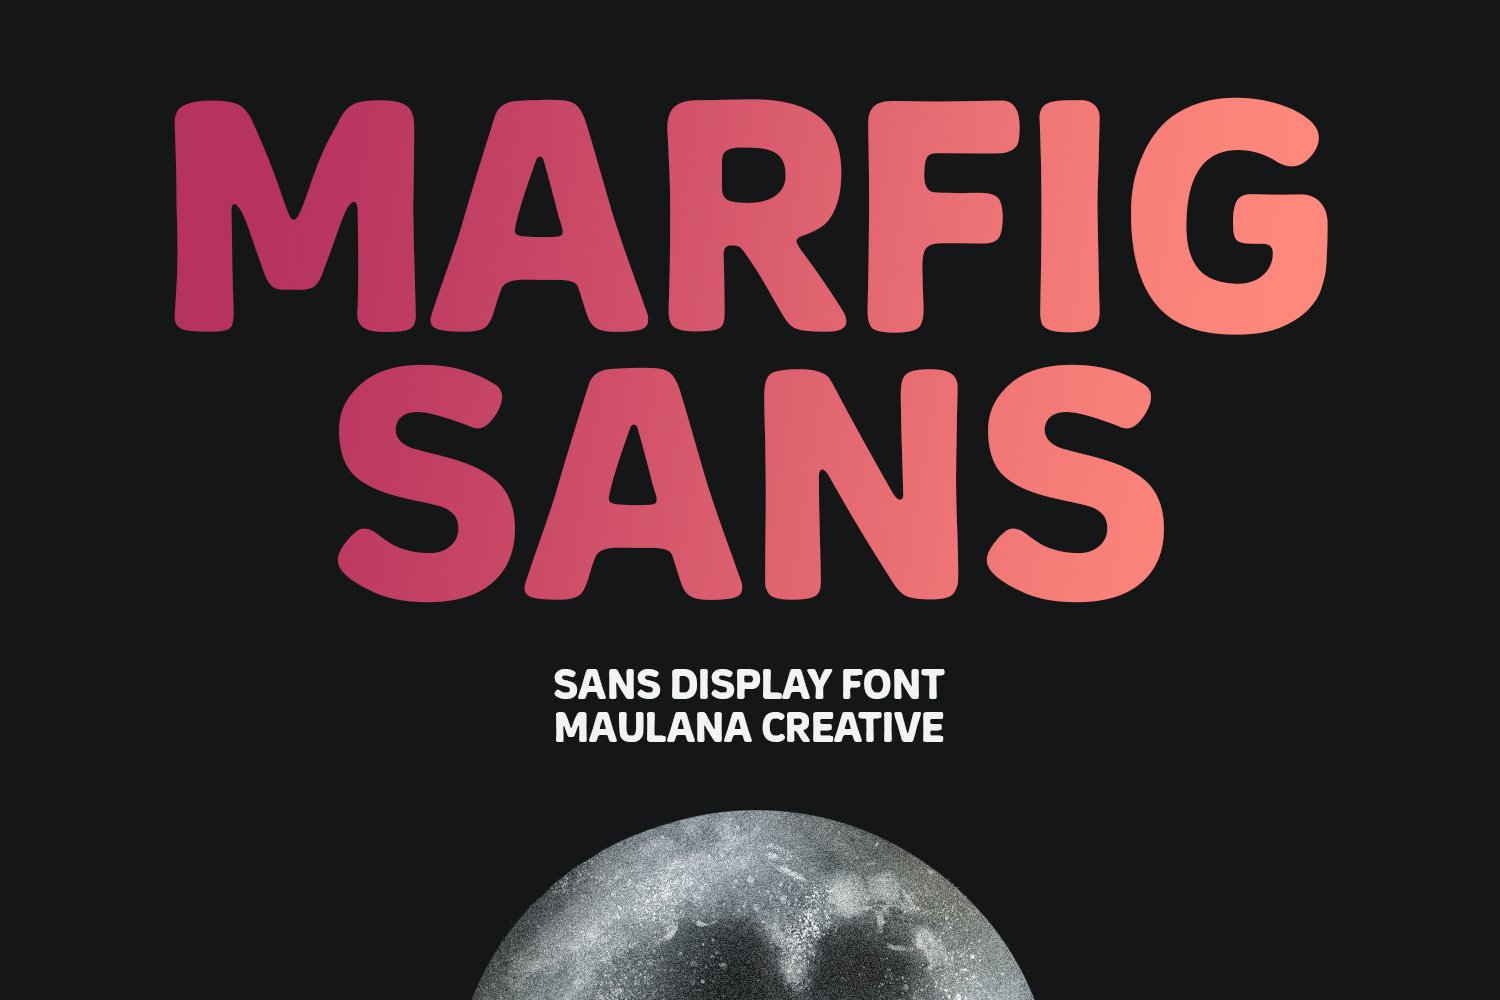 Marfig Sans Display Font cover image.